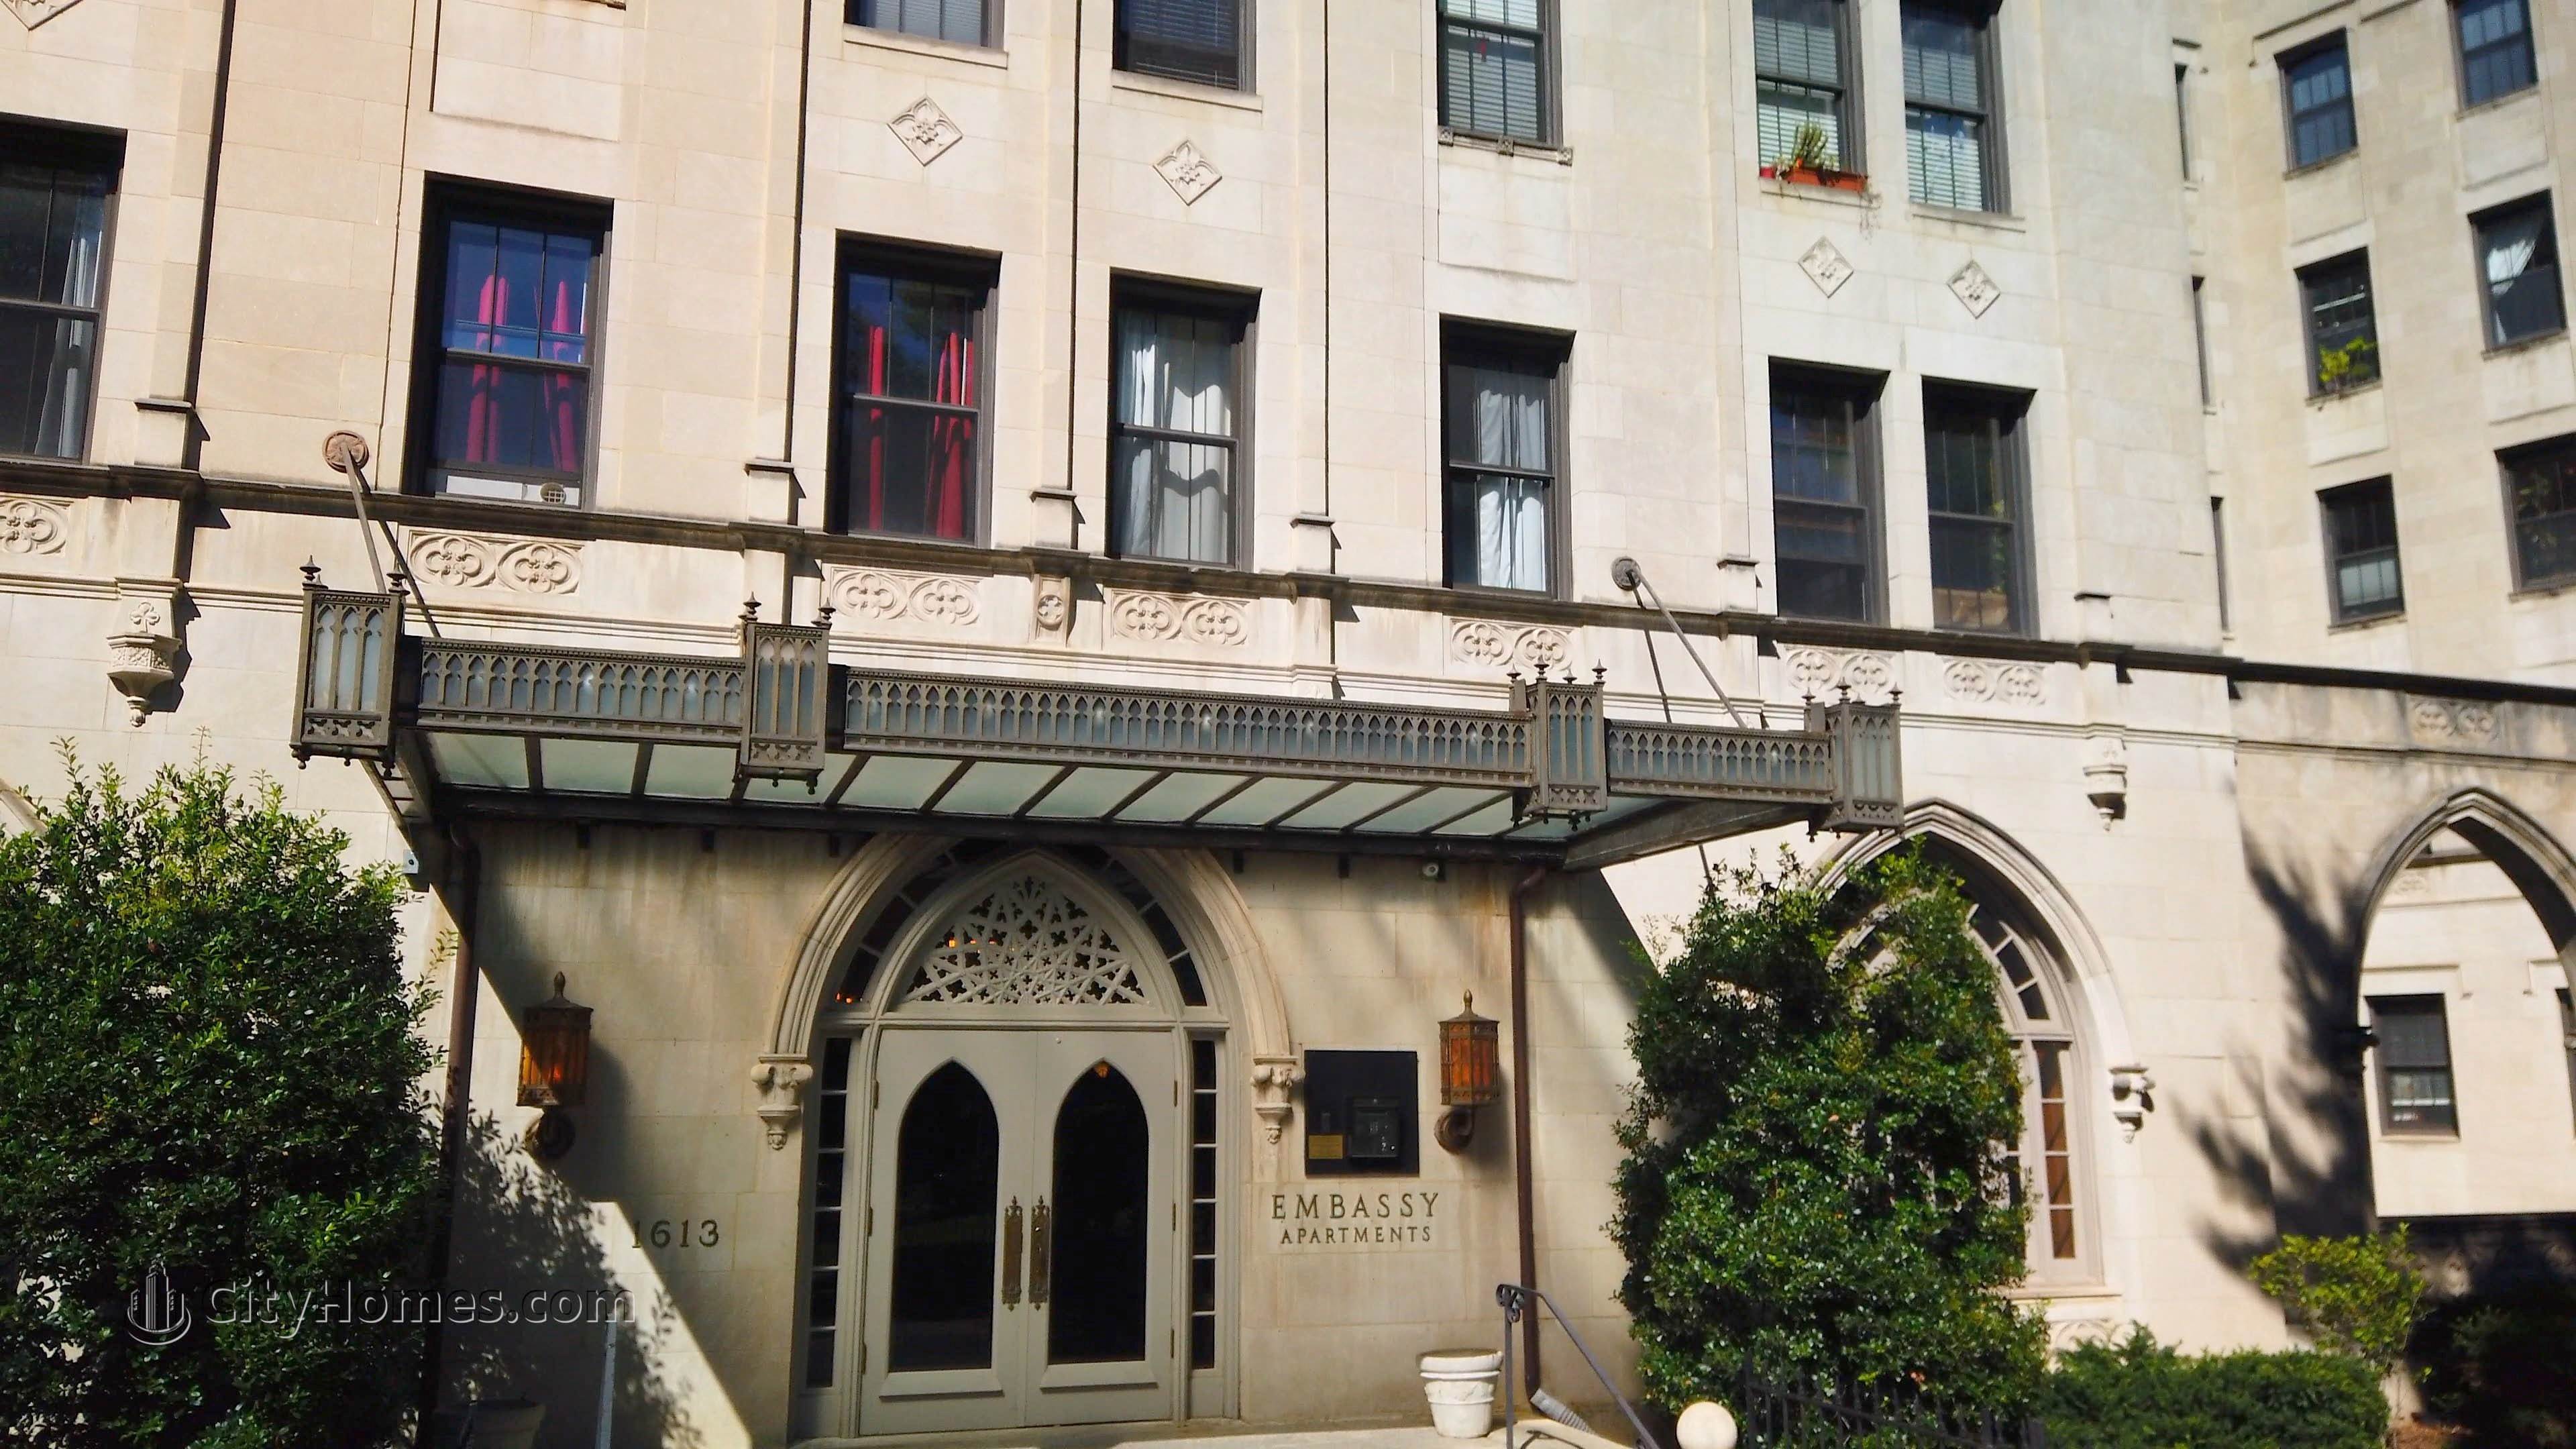 The Embassy edificio a 1613 Harvard St NW, Mount Pleasant, Washington, DC 20009